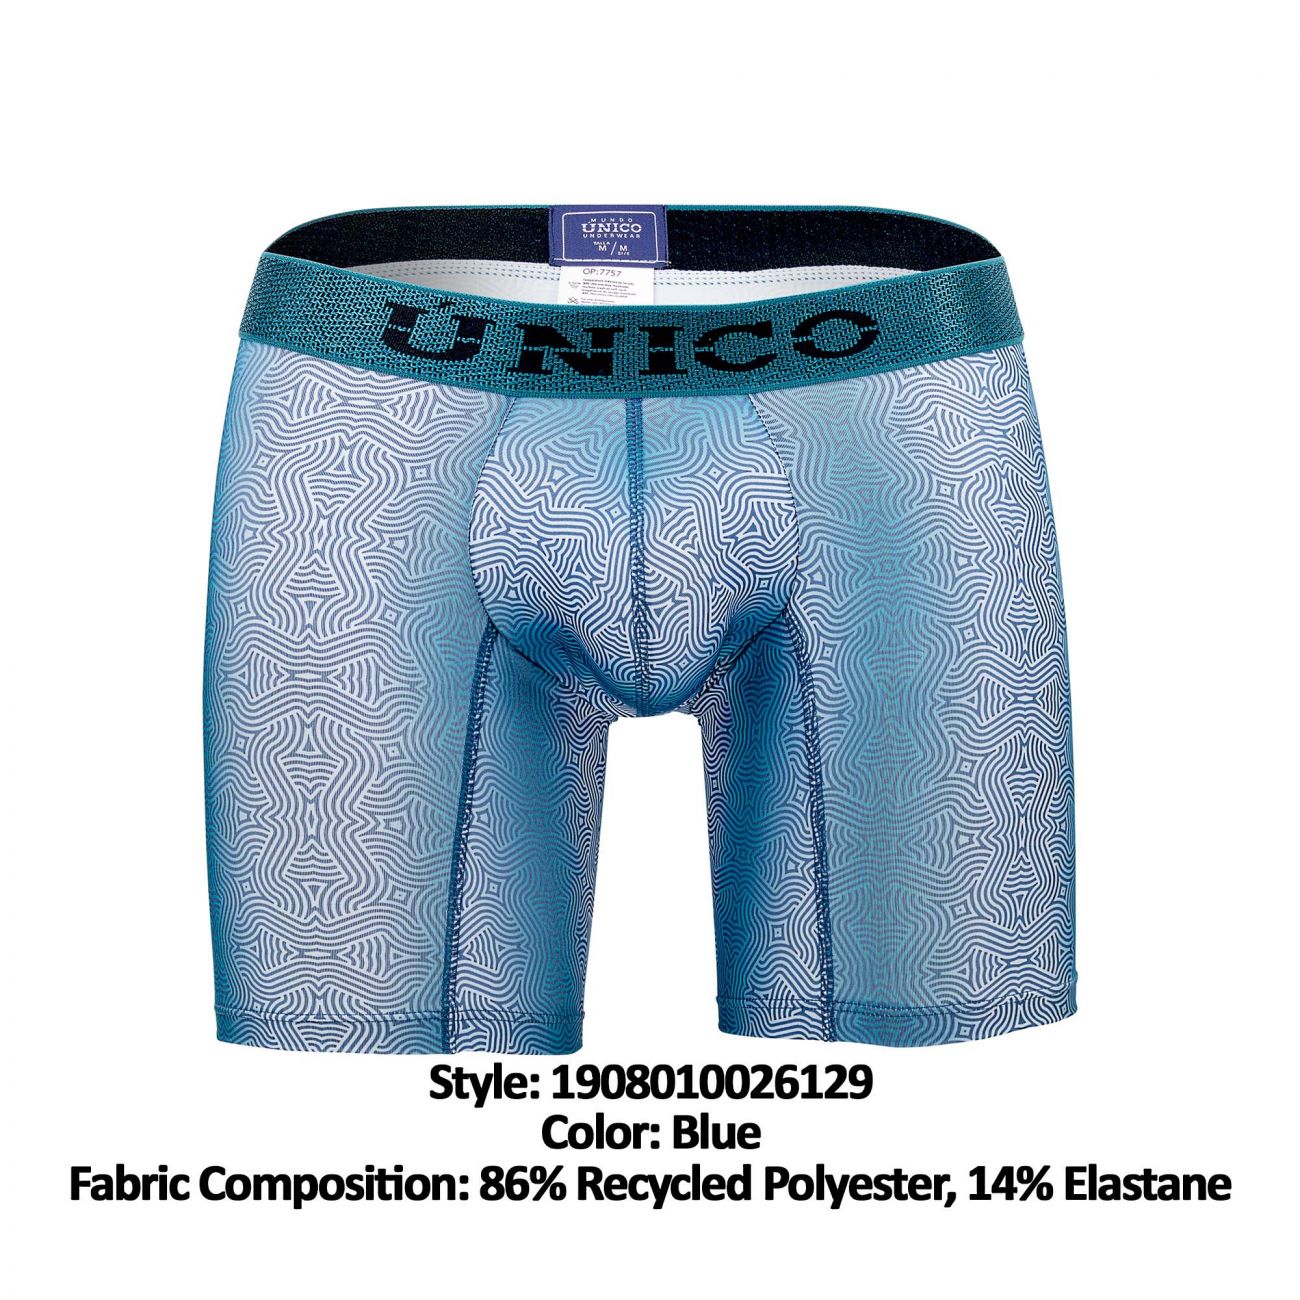 Unico 1908010026129 Boxer Briefs Luminiscente Blue Printed